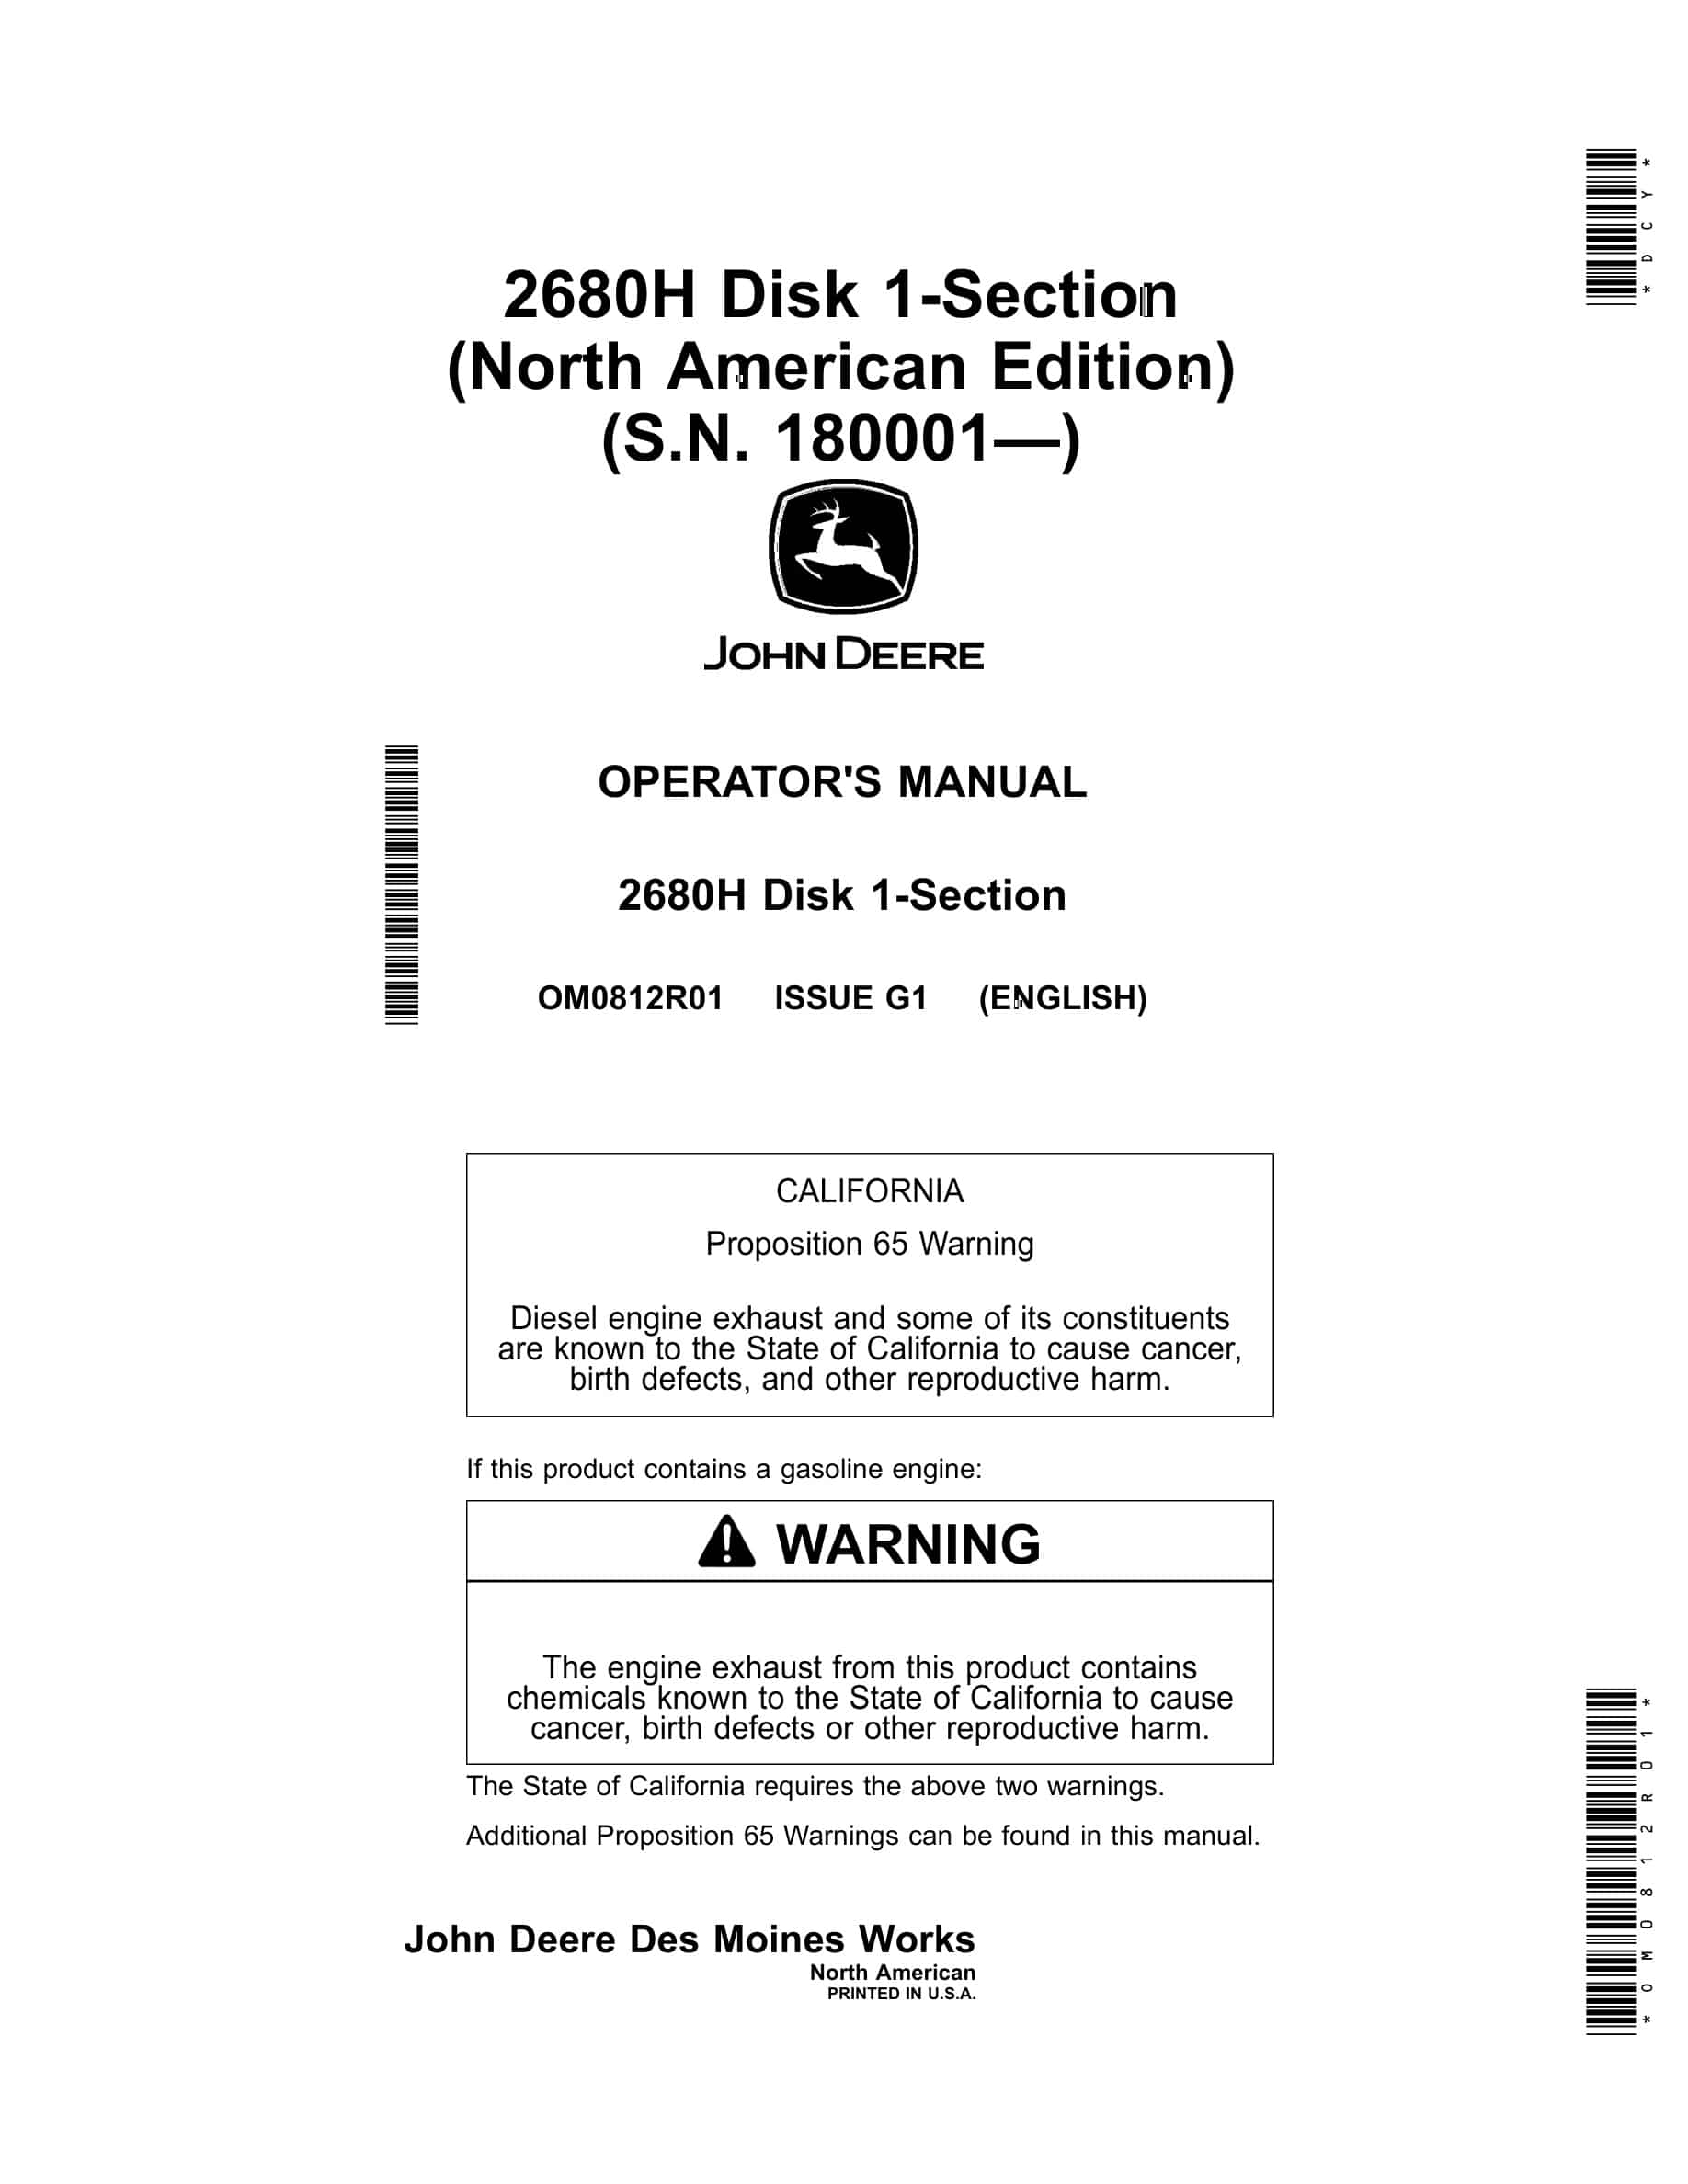 John Deere 2680H Disk 1-Section Operator Manual OM0812R01-1